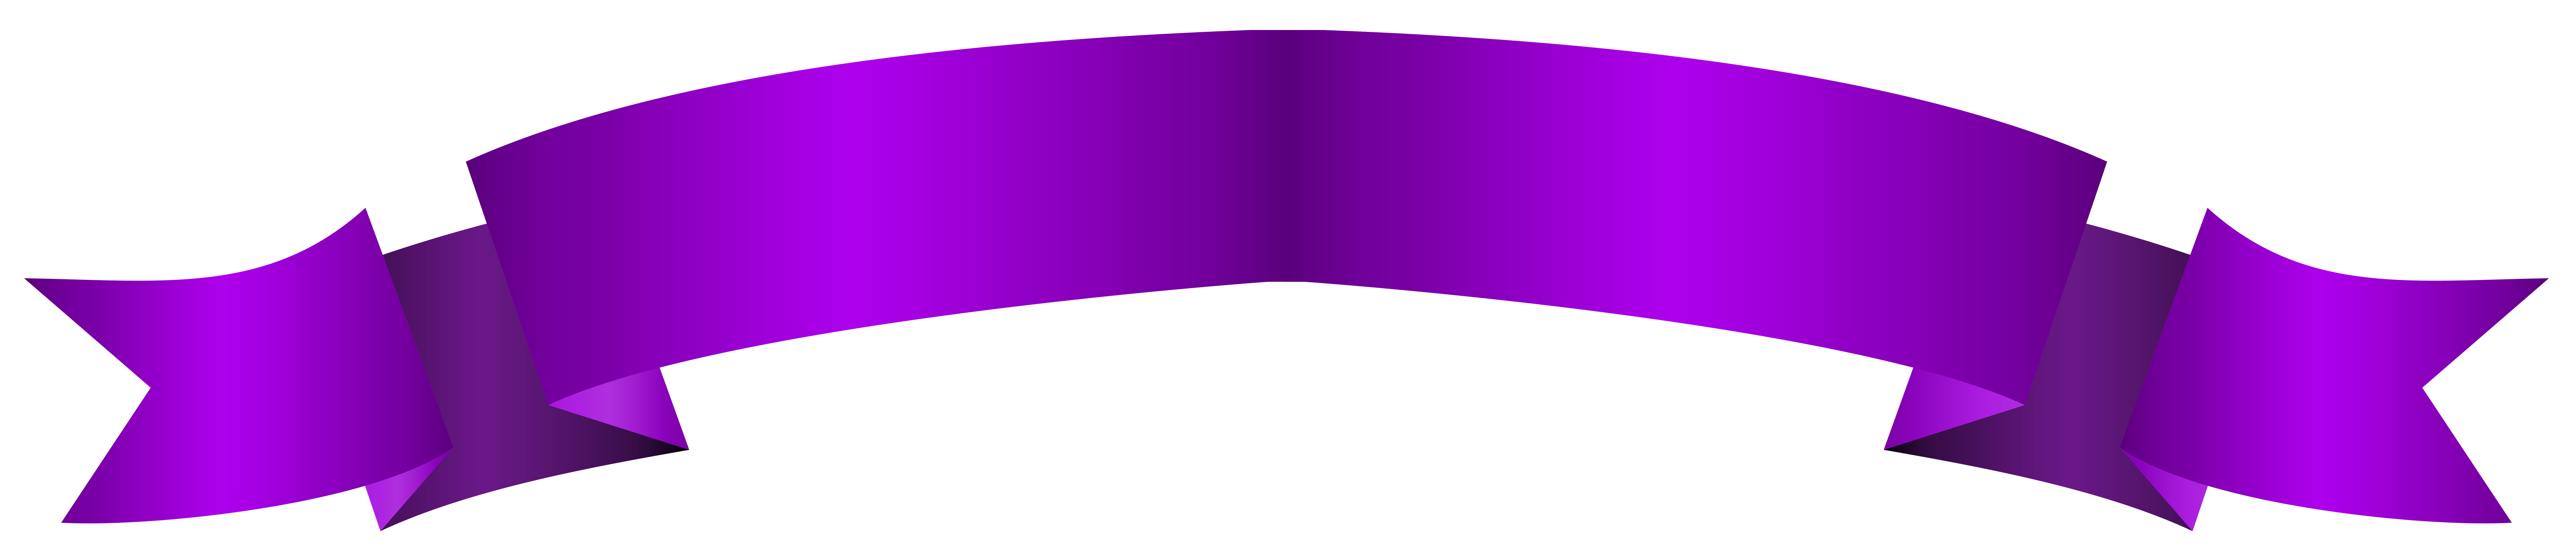 Banner violeta PNG photo